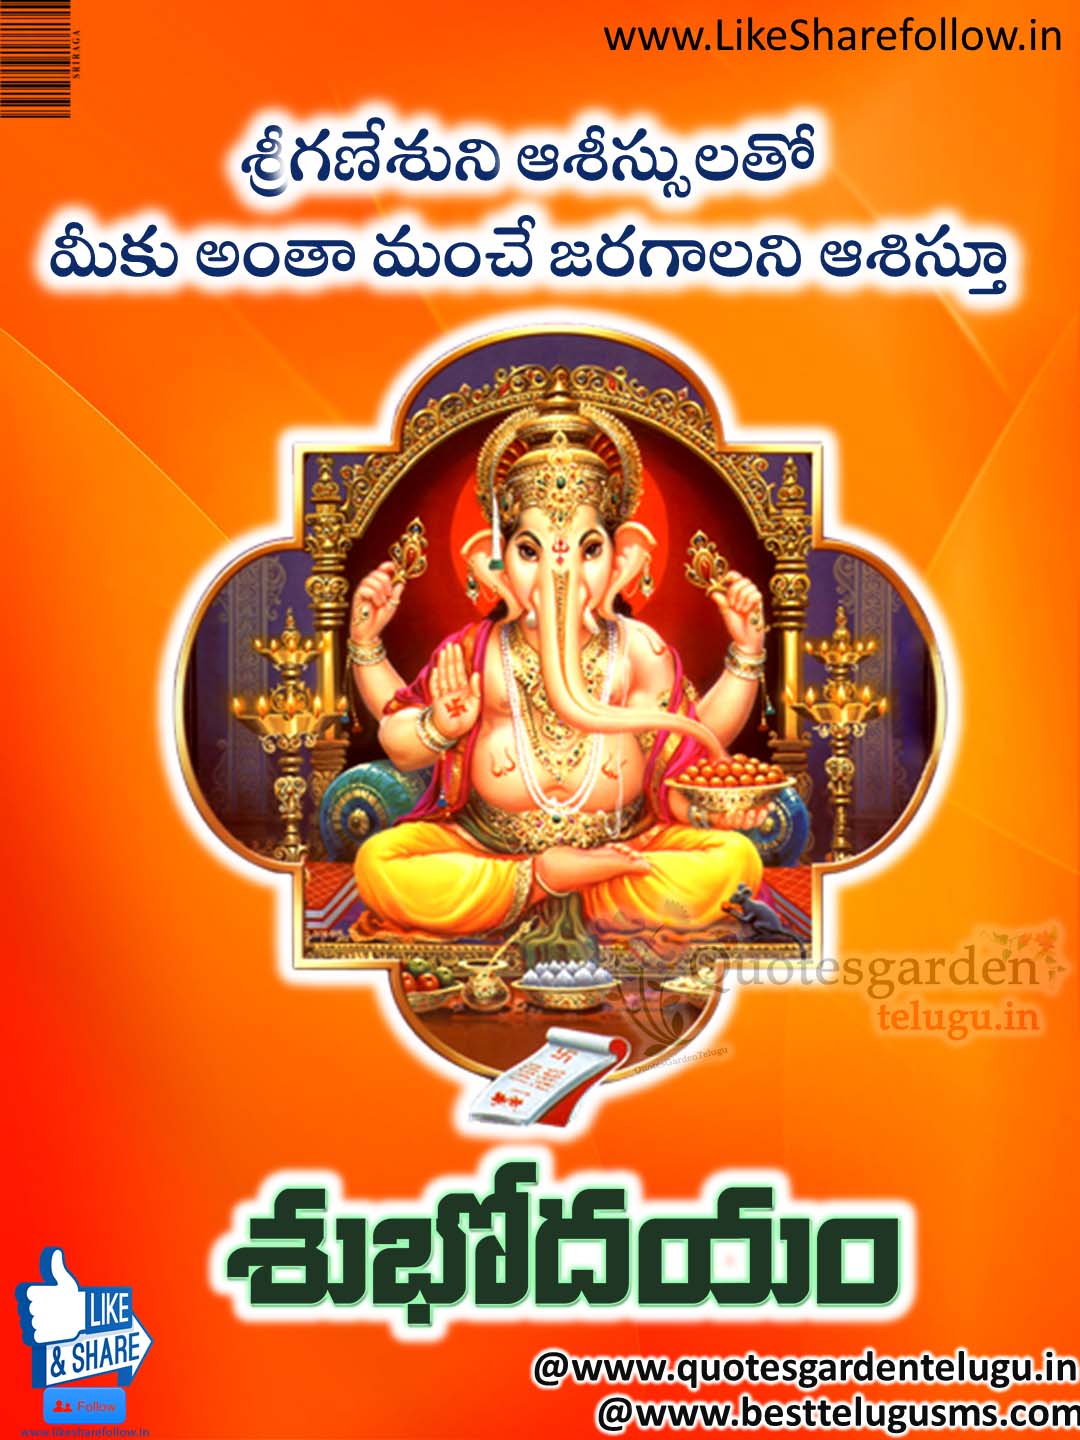 Telugu Mobile wallpapers with Lord Ganesha | Like Share Follow